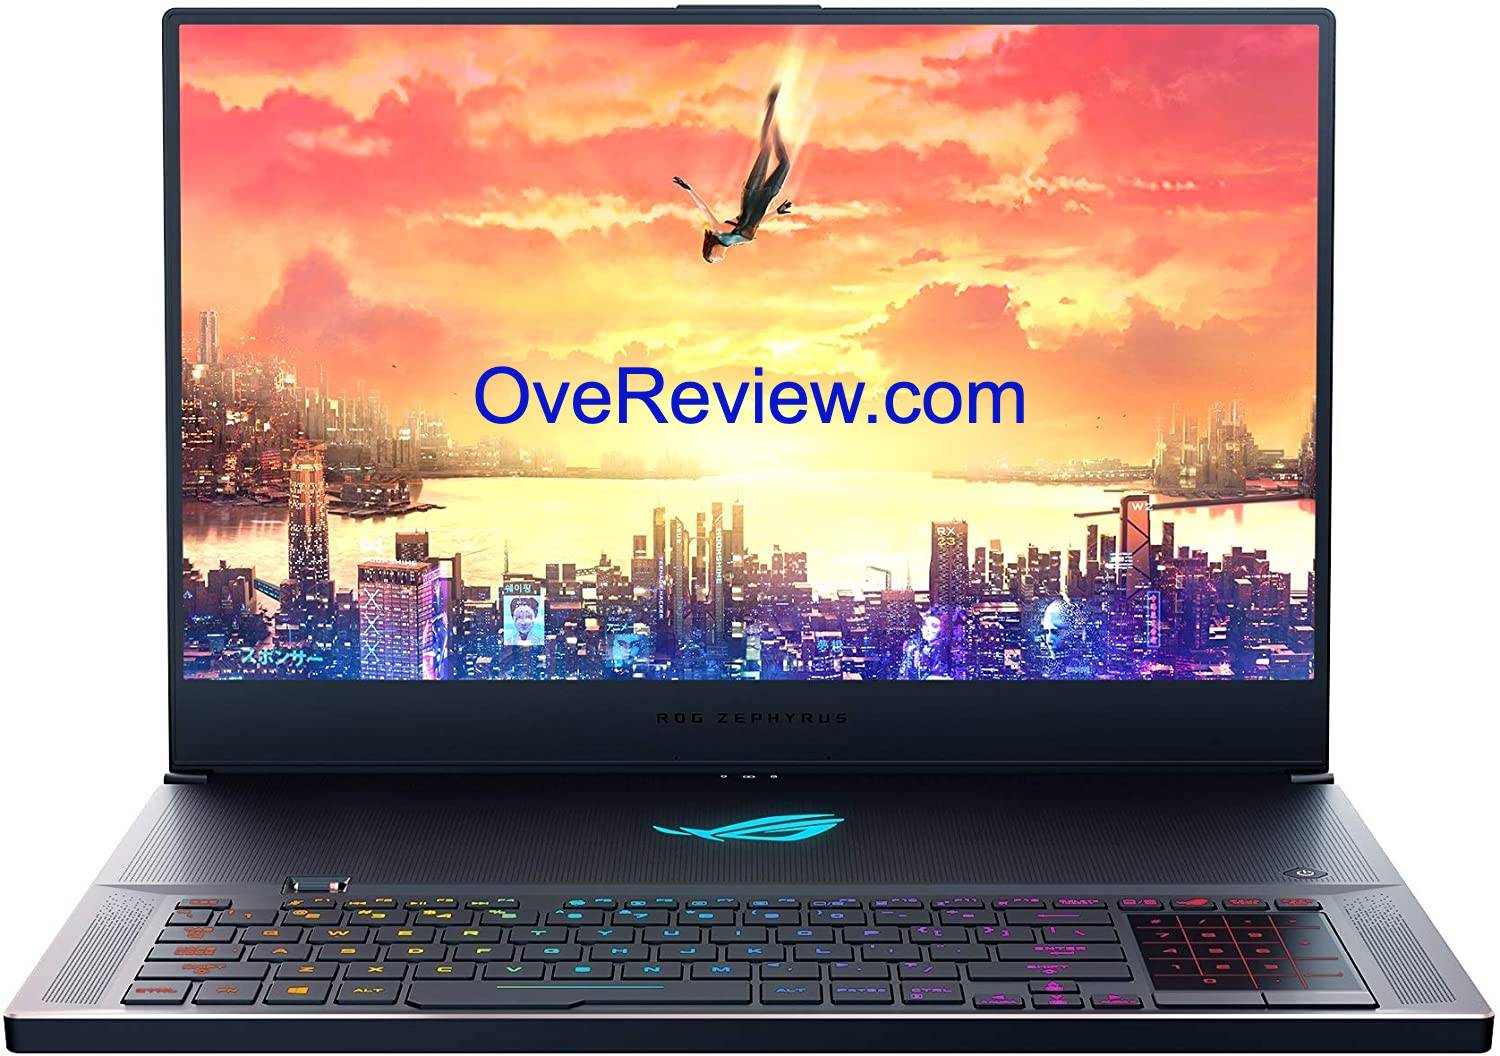 ASUS Laptop Cyber Monday Sale, Deals [year] - HUGE Discount 5